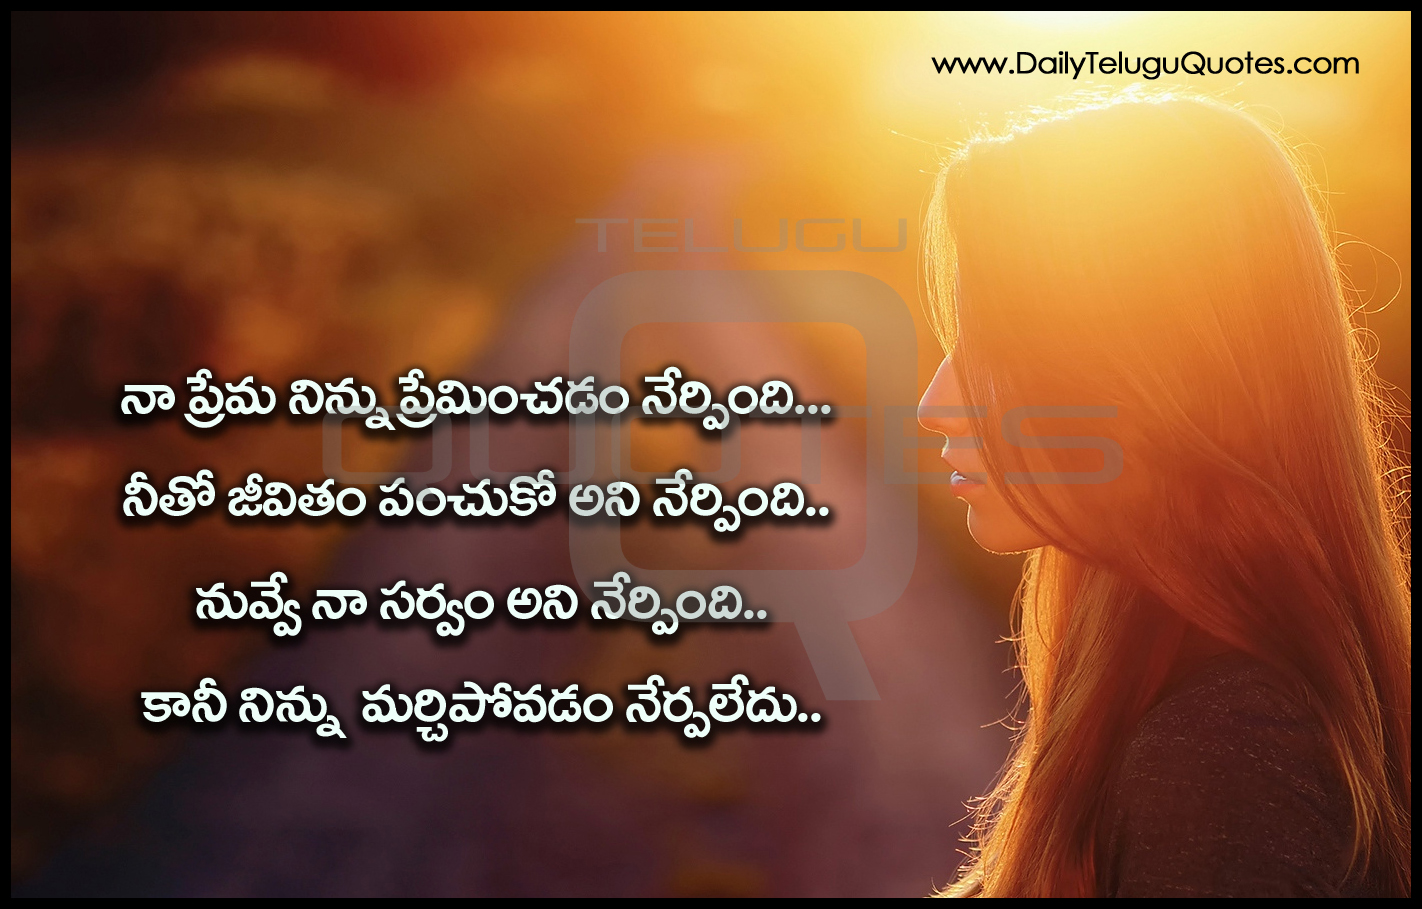 Telugu Inspiring Quotes on Patience Legendary Quotes Telugu Quotes English… TELUGU QUOTES Pinterest